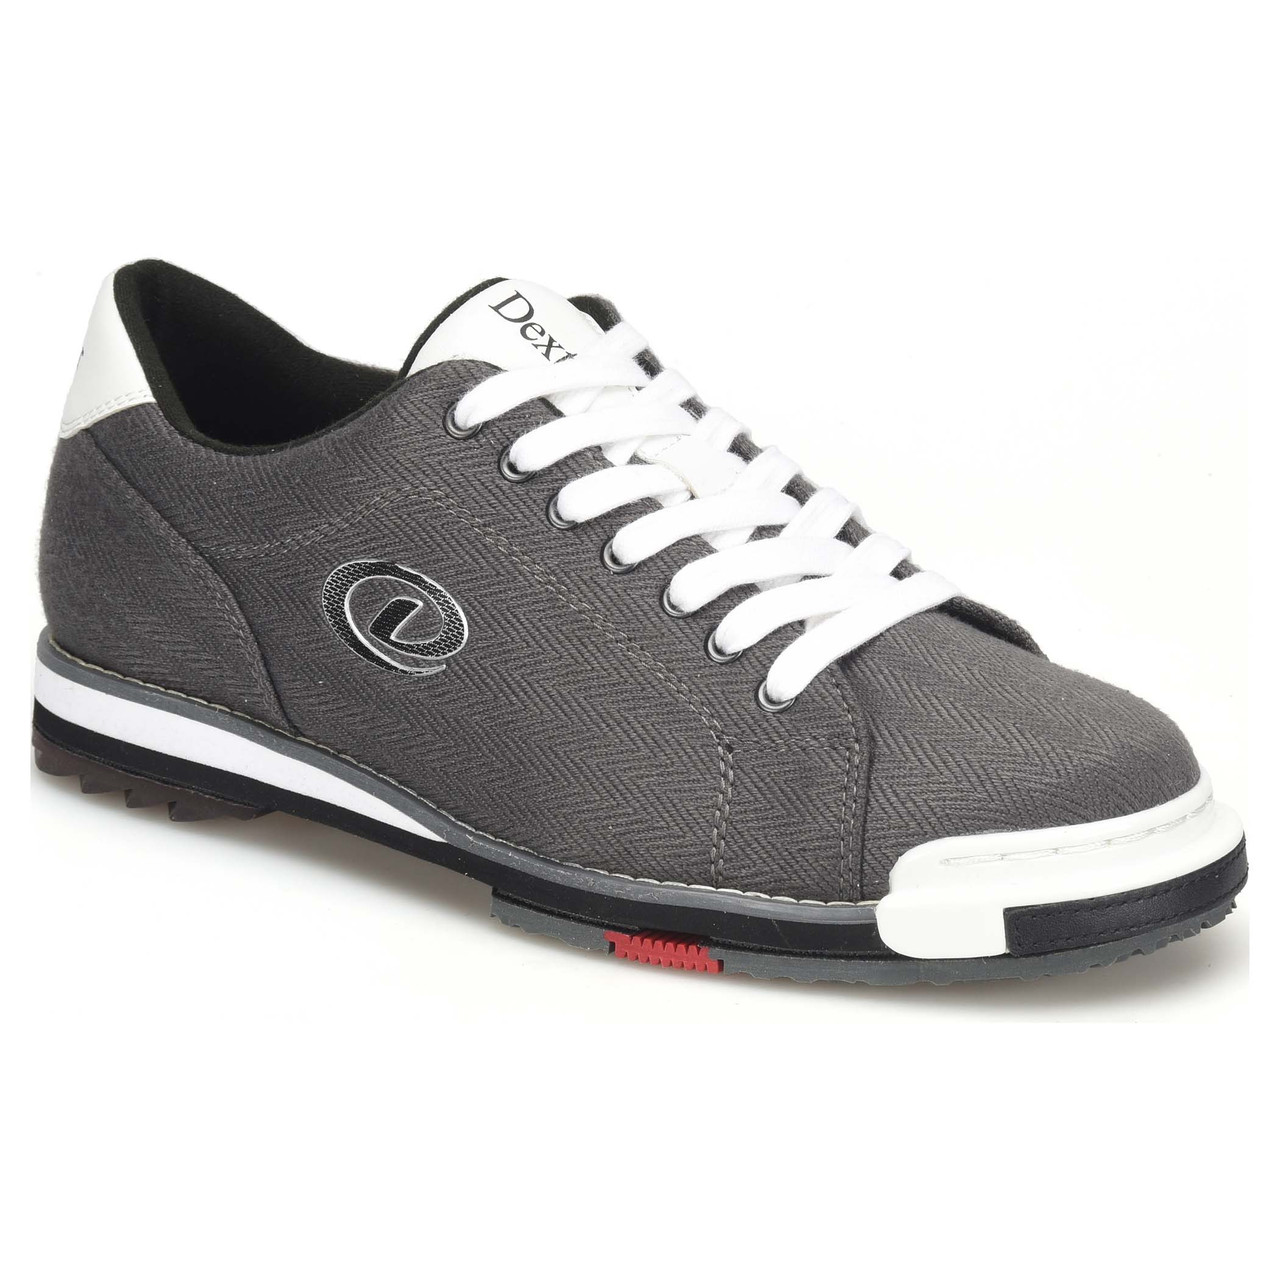 Dexter unisex adult Bowling Shoes， Grey/Black， 10.0 W US並行輸入